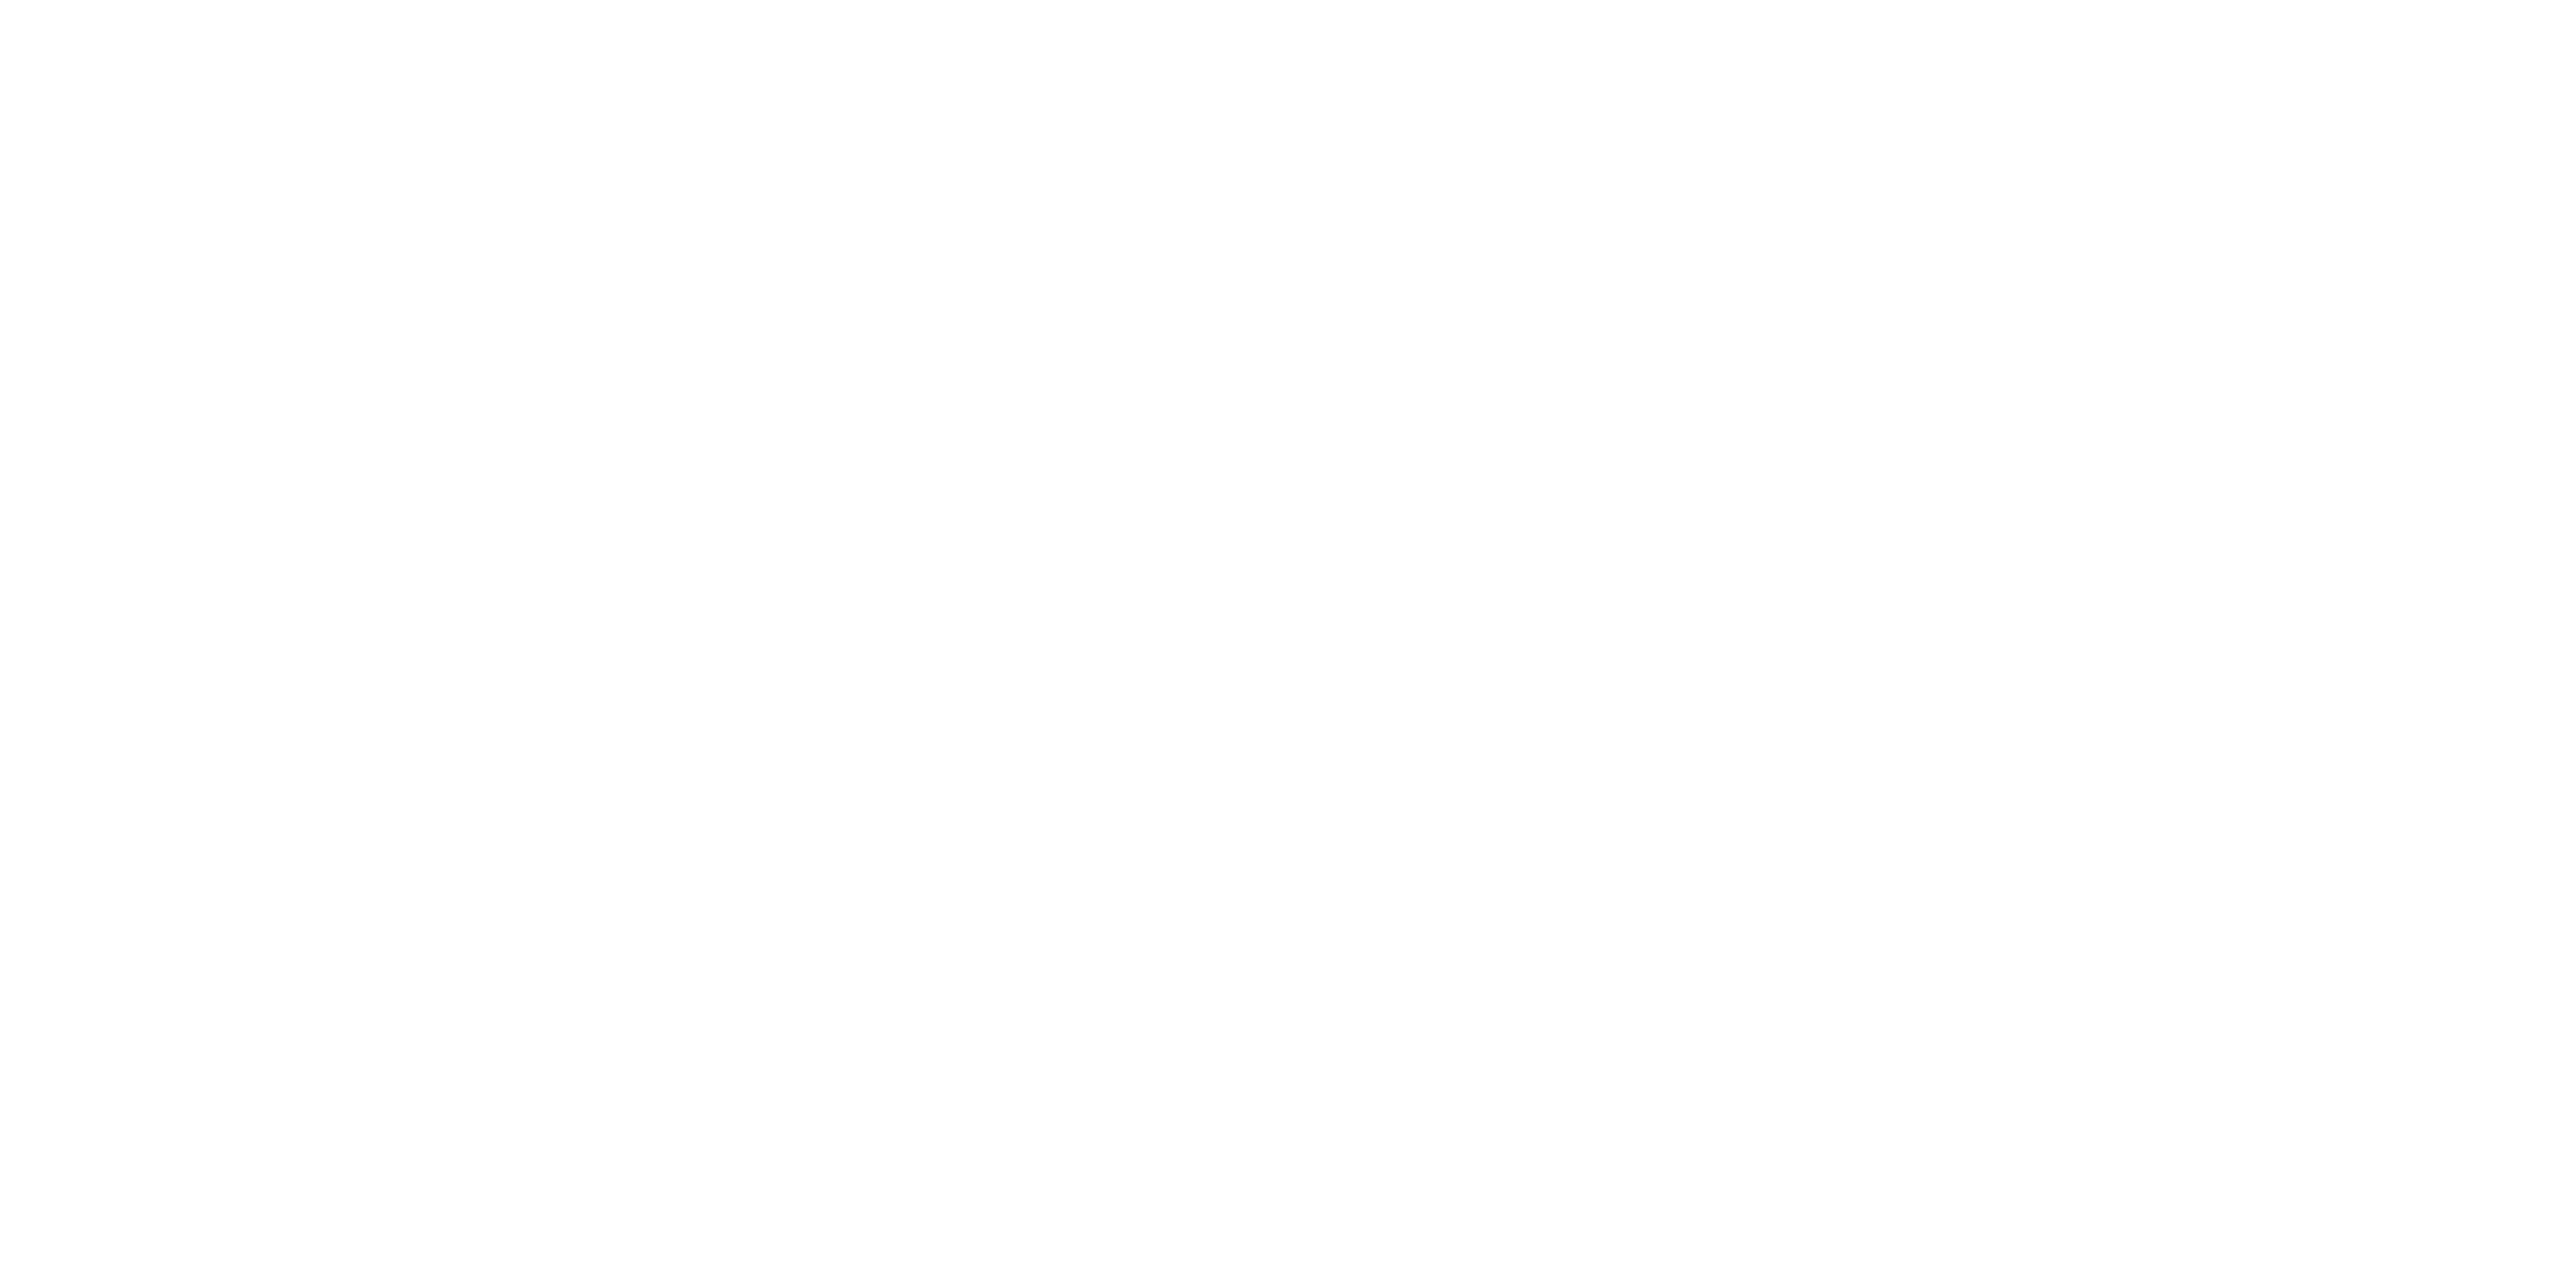 Beeby Avionics Consulting